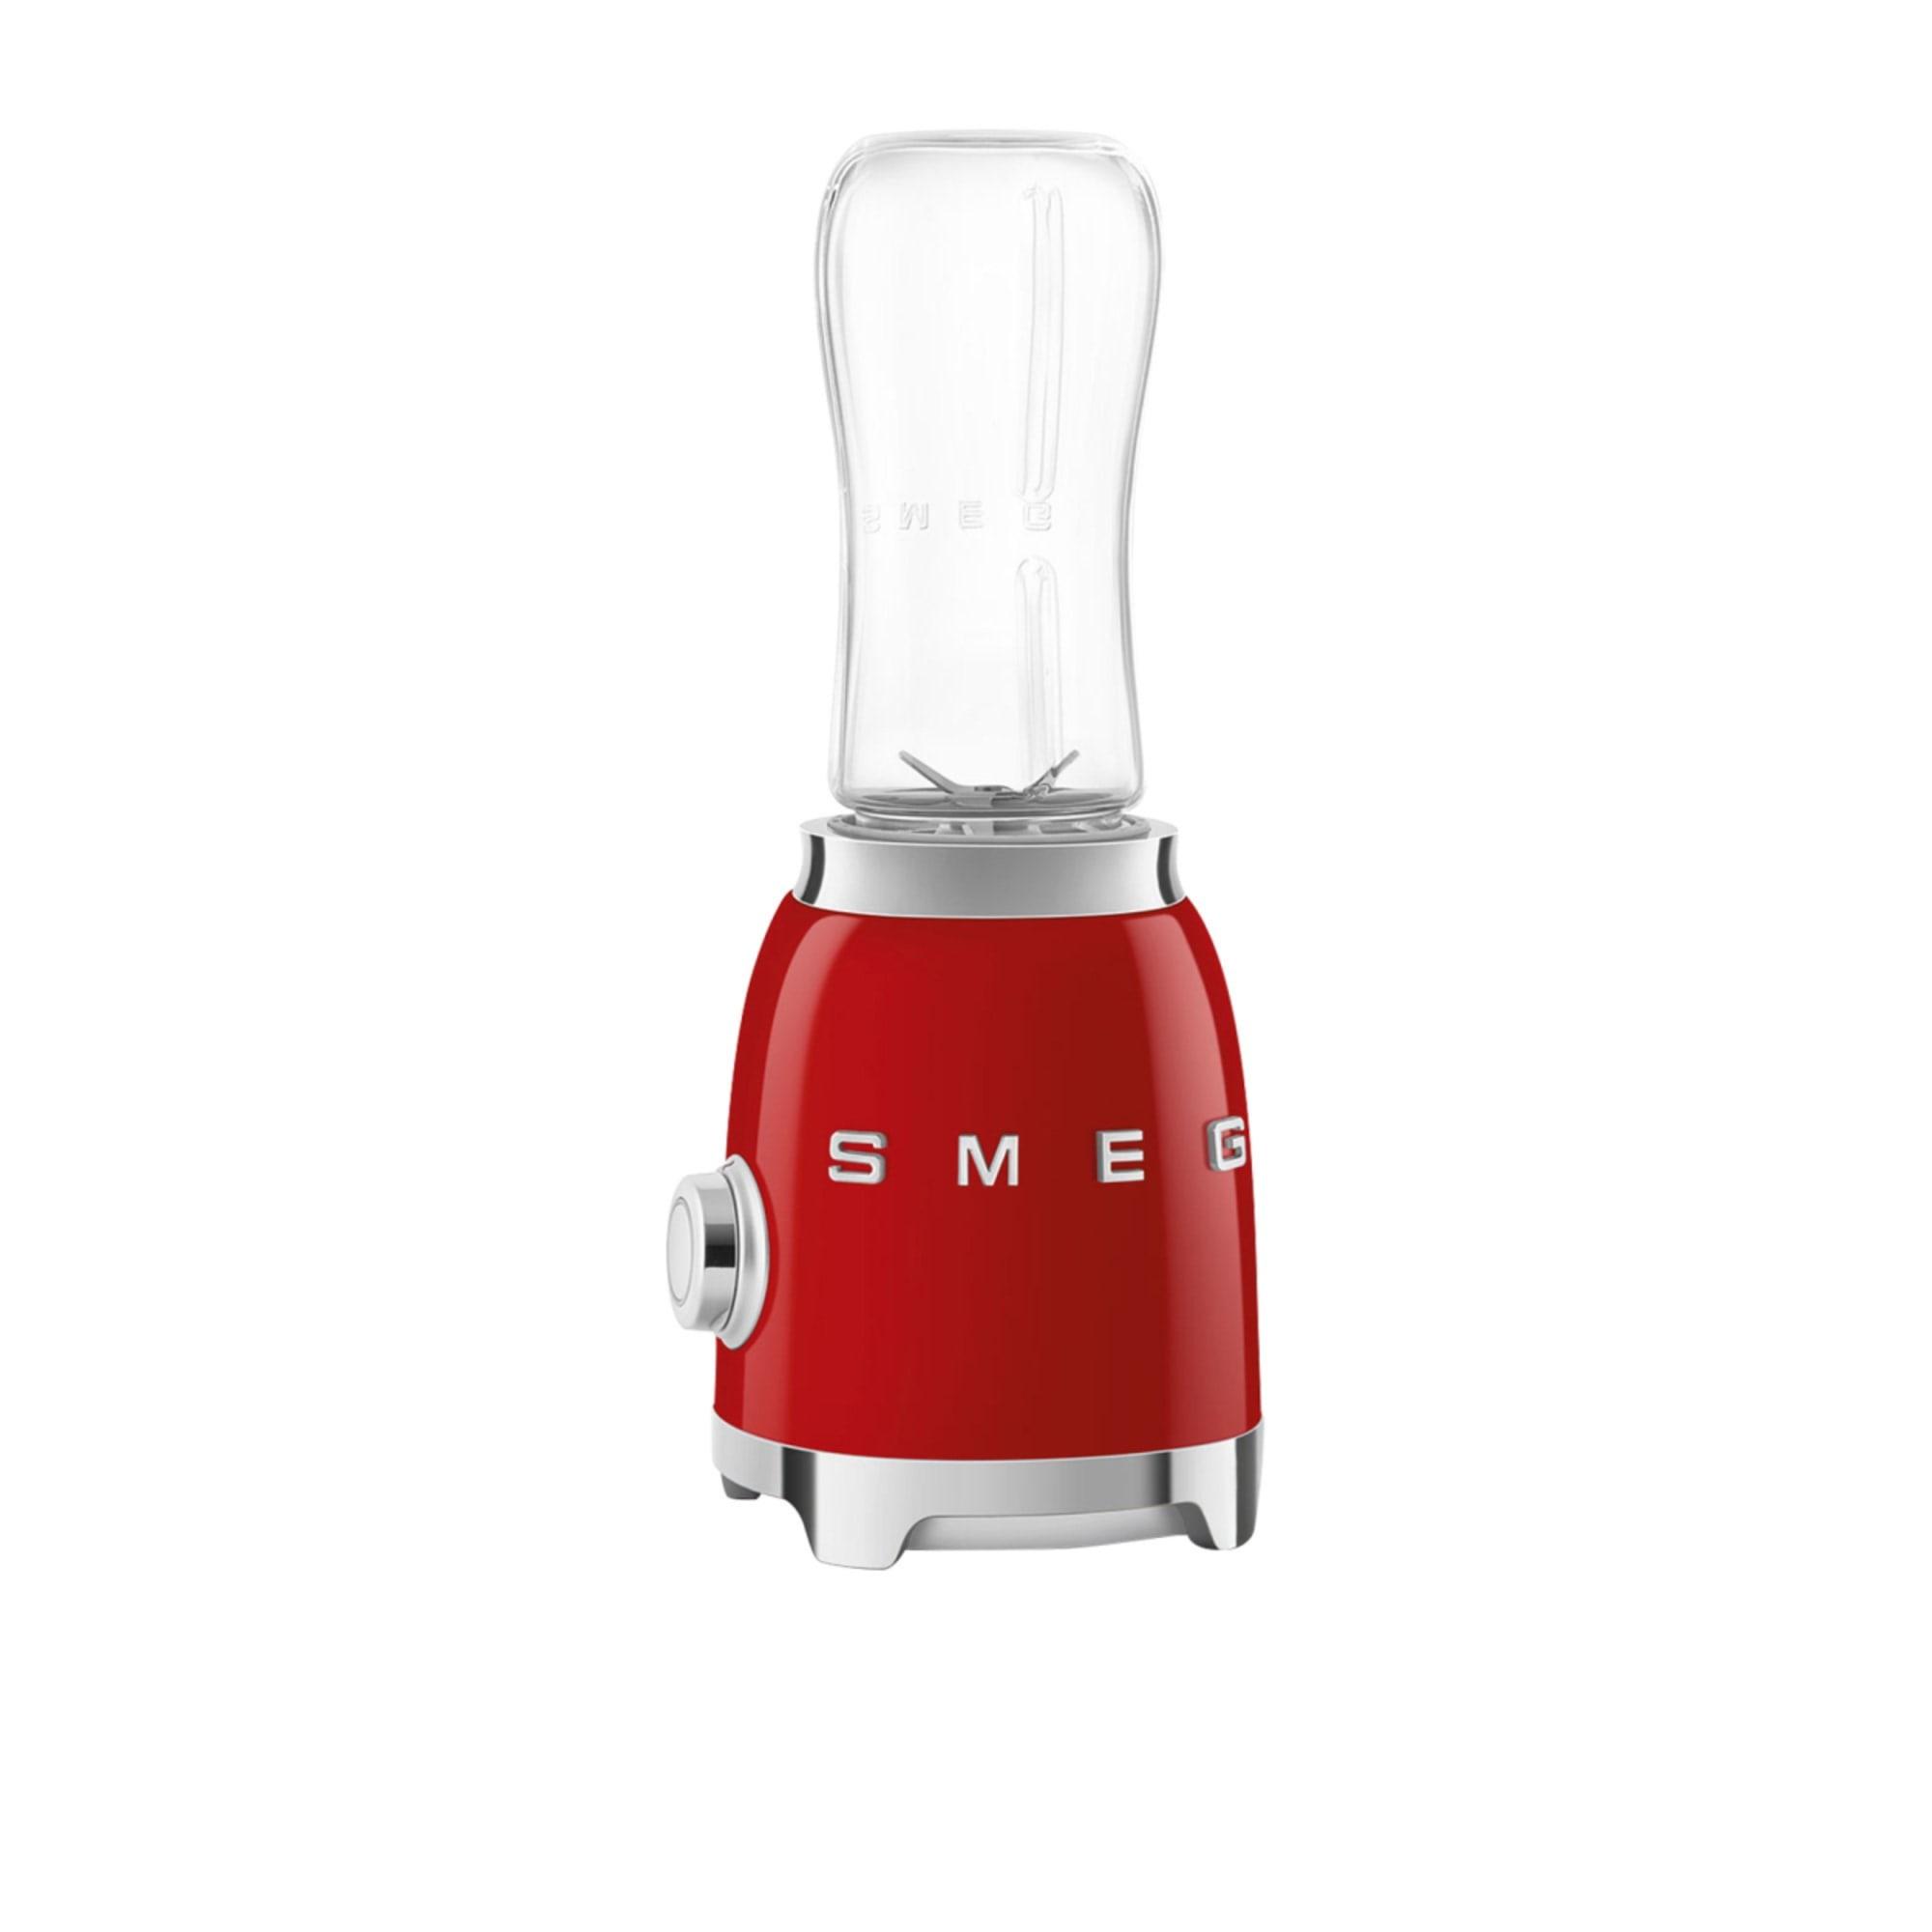 Smeg 50's Retro Style Mini Blender Red Image 5